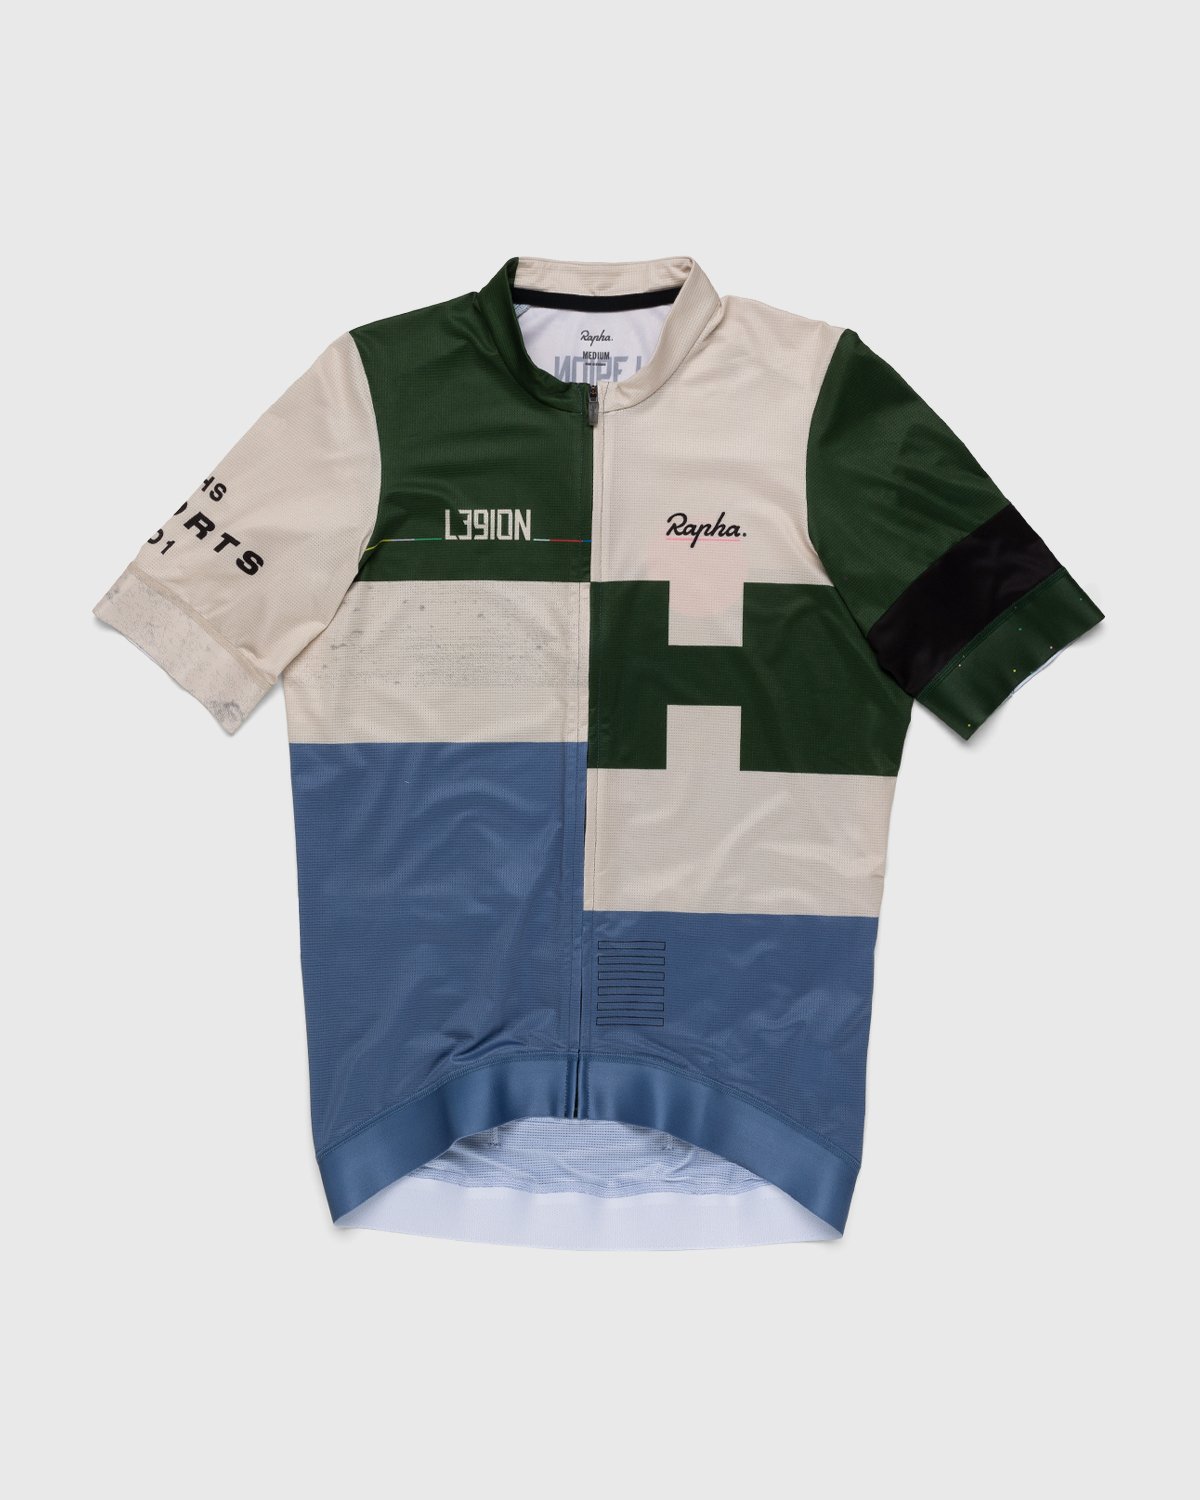 Rapha x L39ION of LA x Highsnobiety - Men's HS Sports Cycling Jersey Multi - Clothing - Multi - Image 1